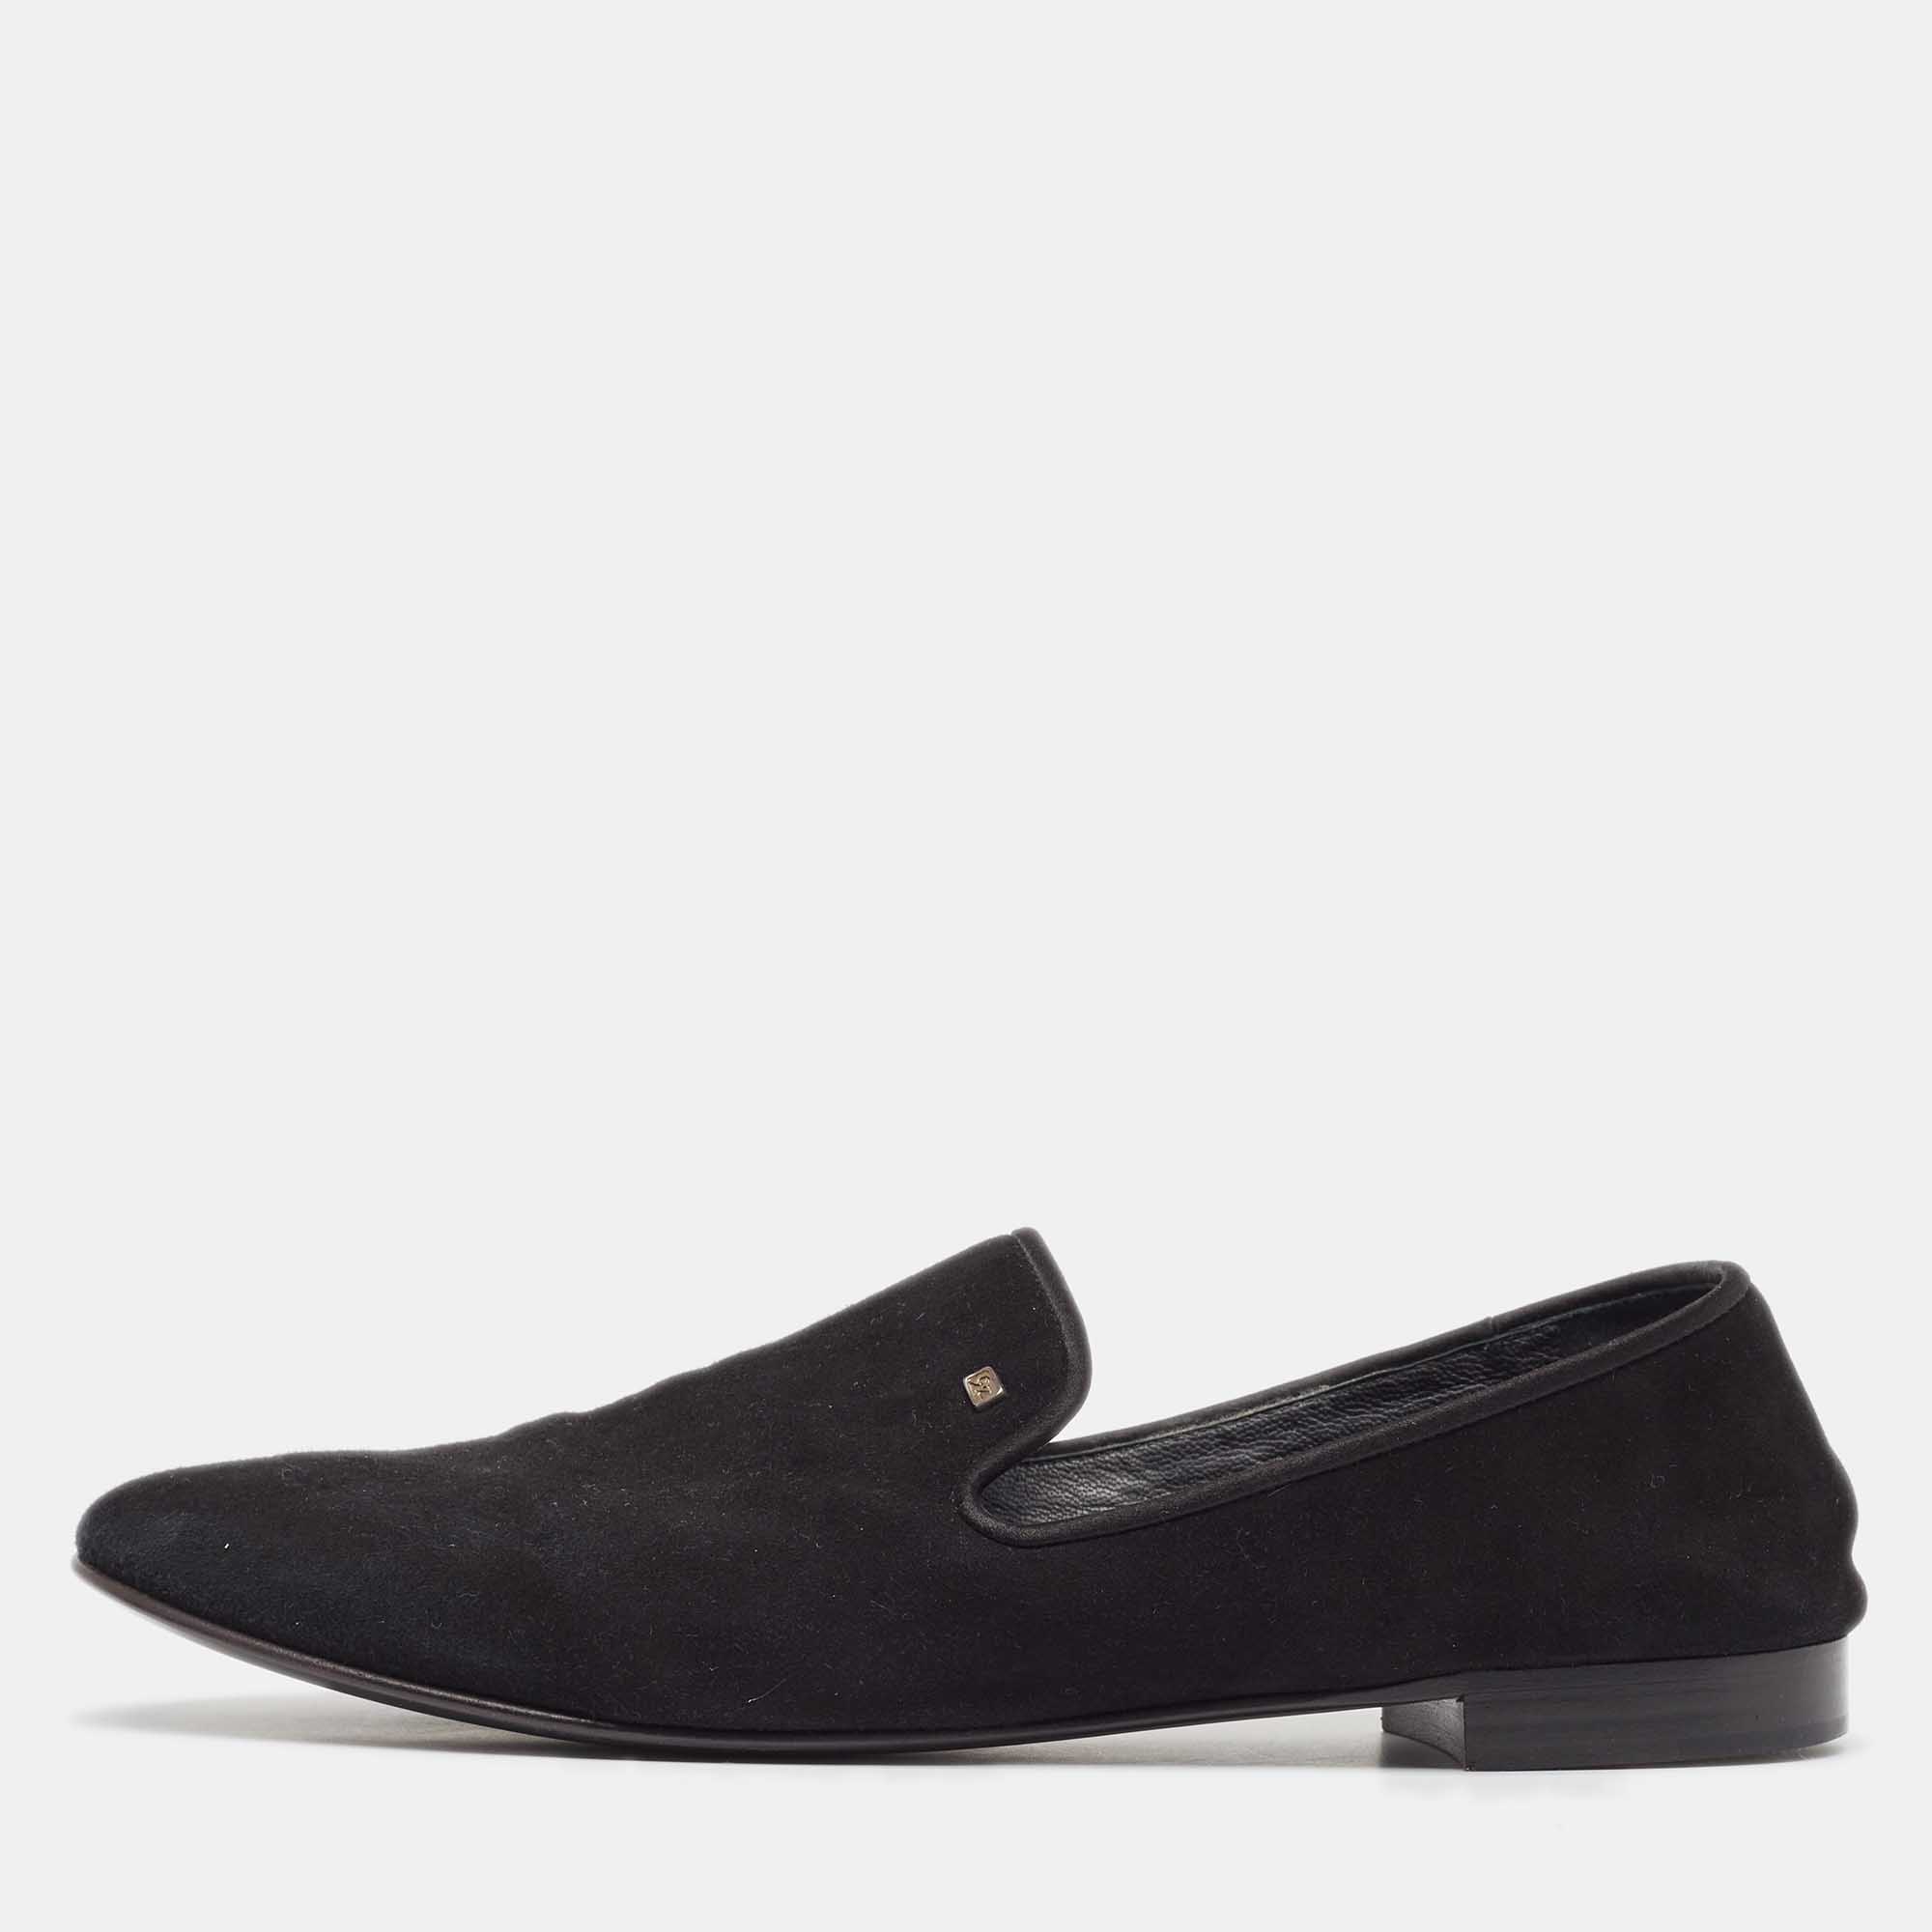 Giuseppe zanotti black suede kevin smoking slippers size 44